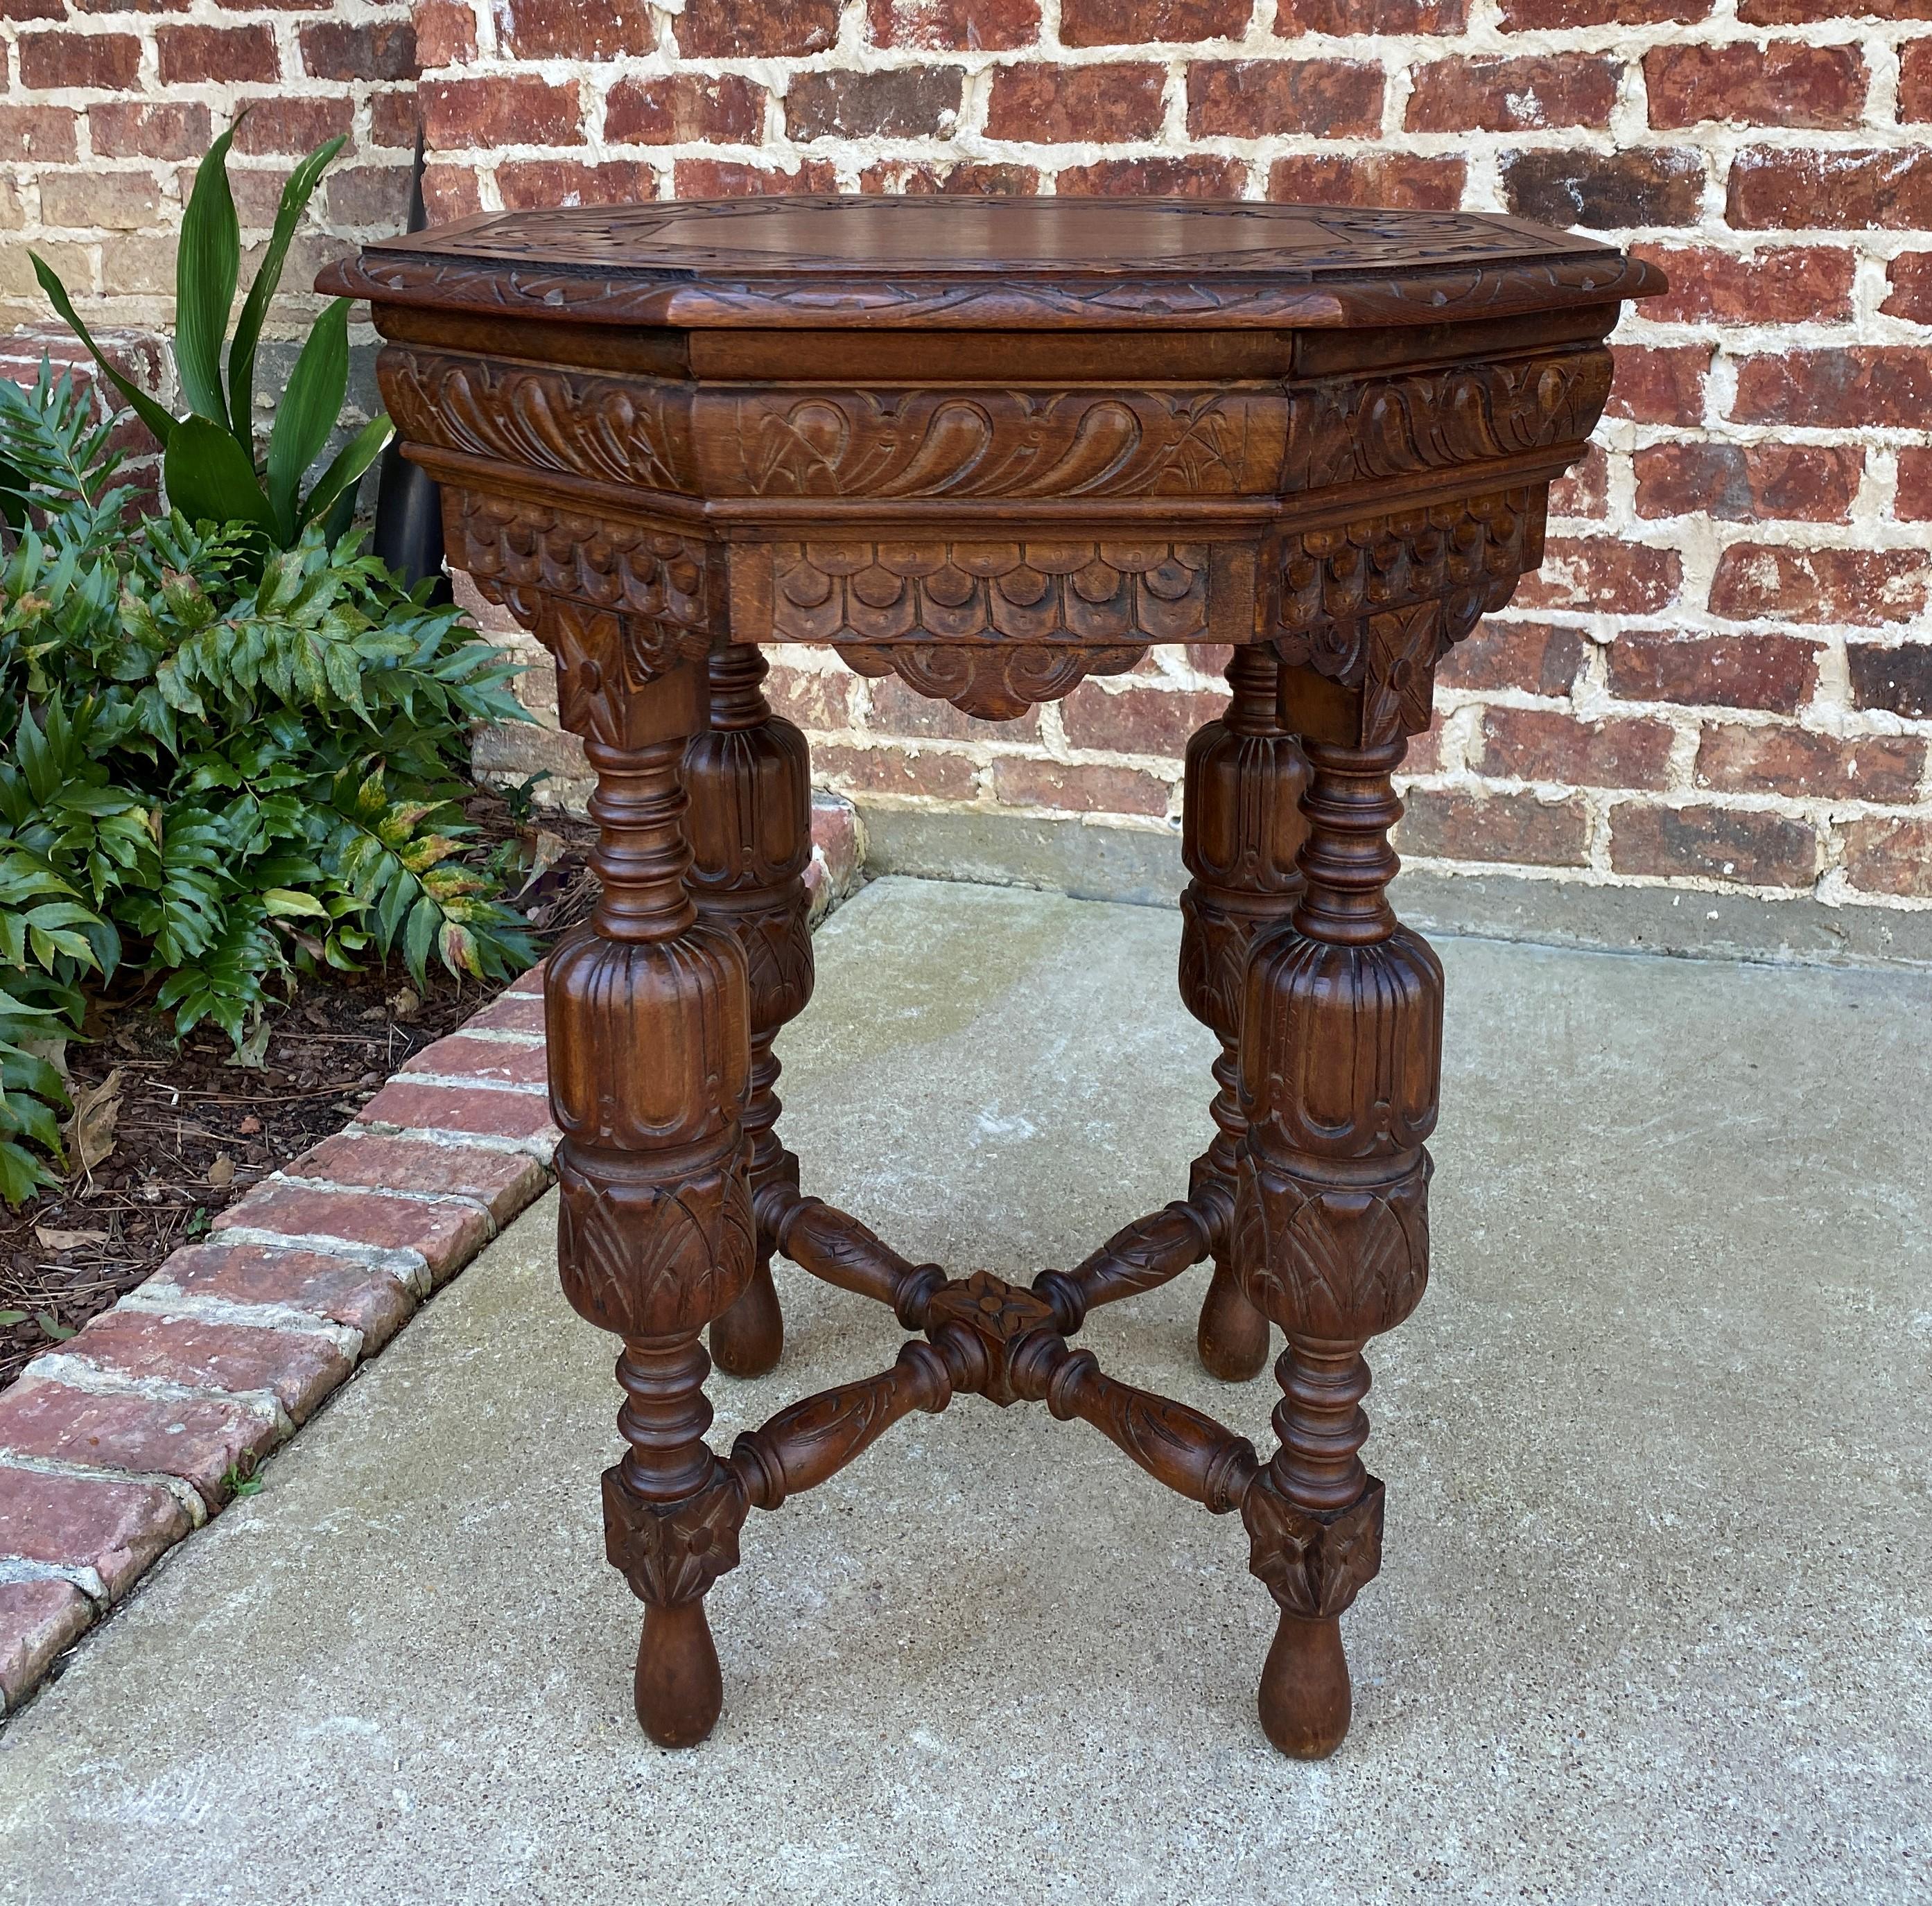 Antique French Octagonal Table Renaissance Revival Carved Oak 19th C For Sale 2